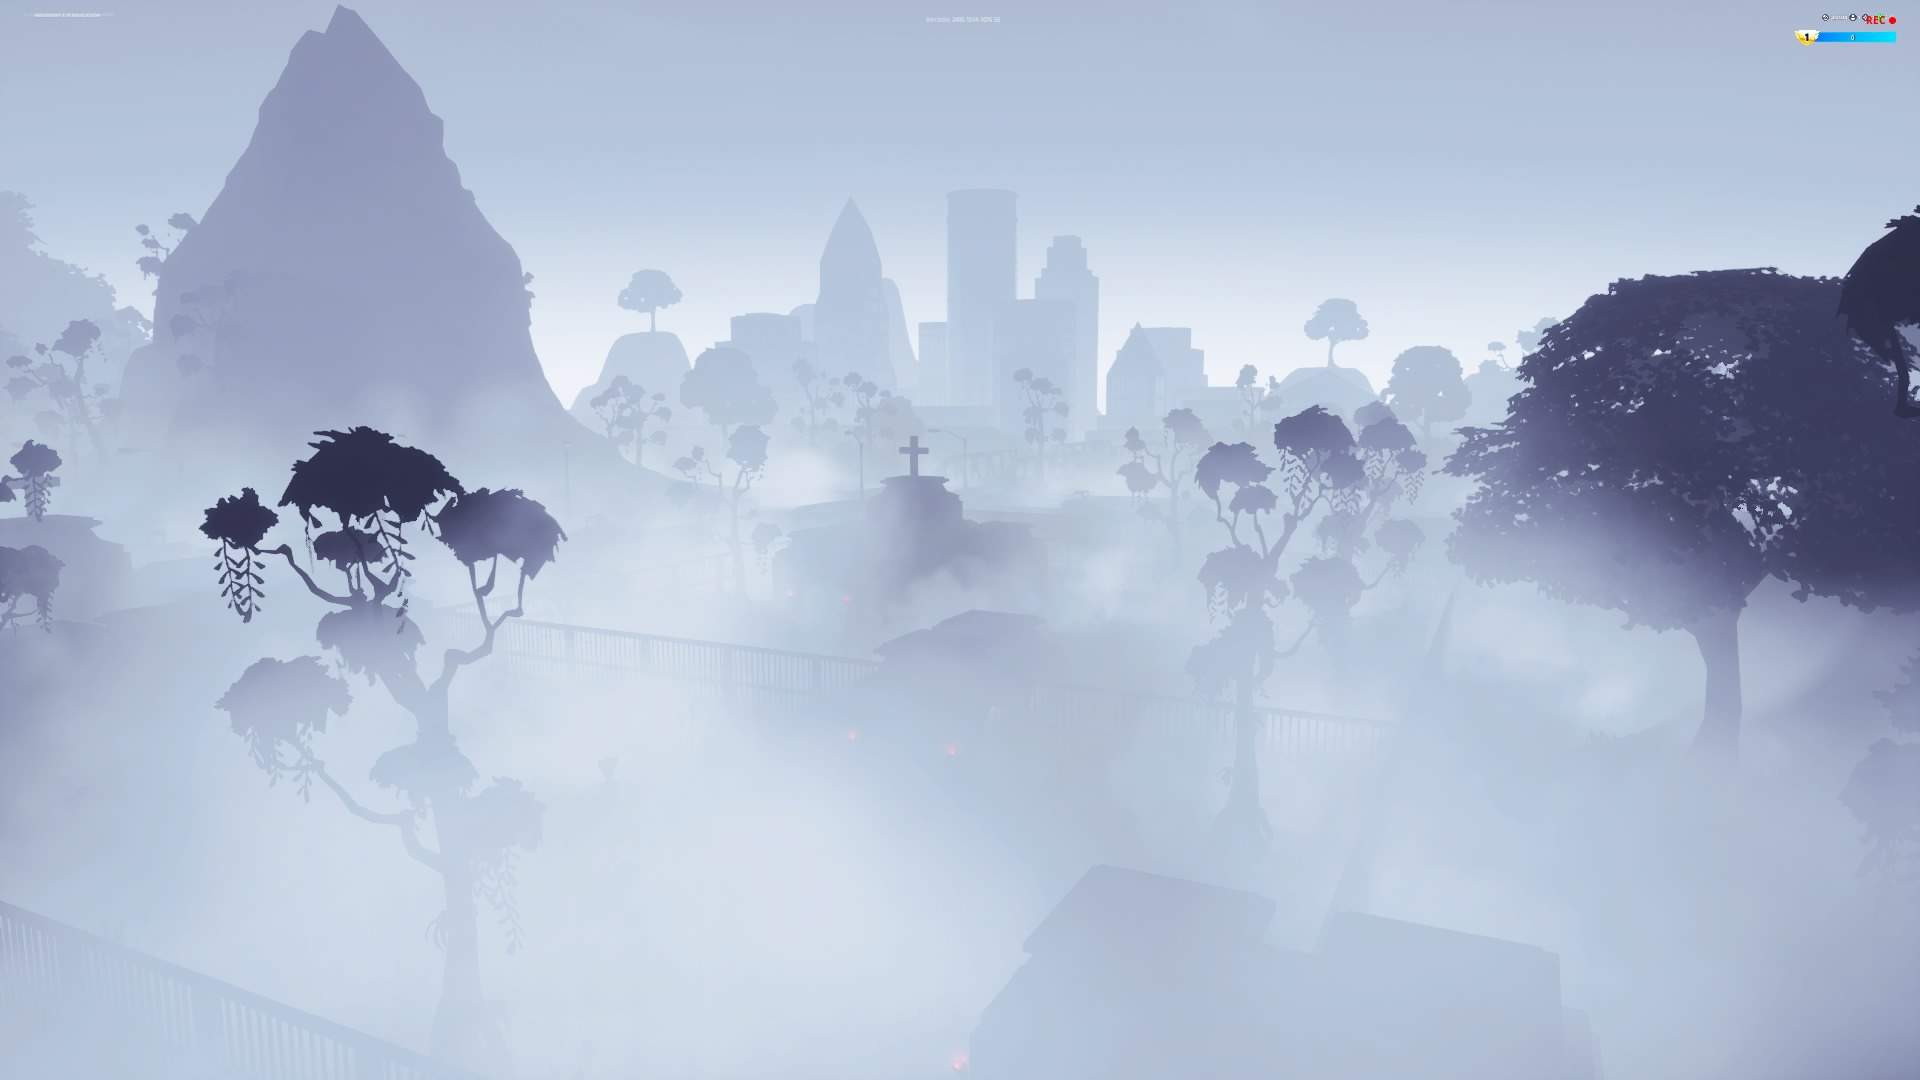 ¤ Silent Hills ¤ Nightmare city ¤ image 2